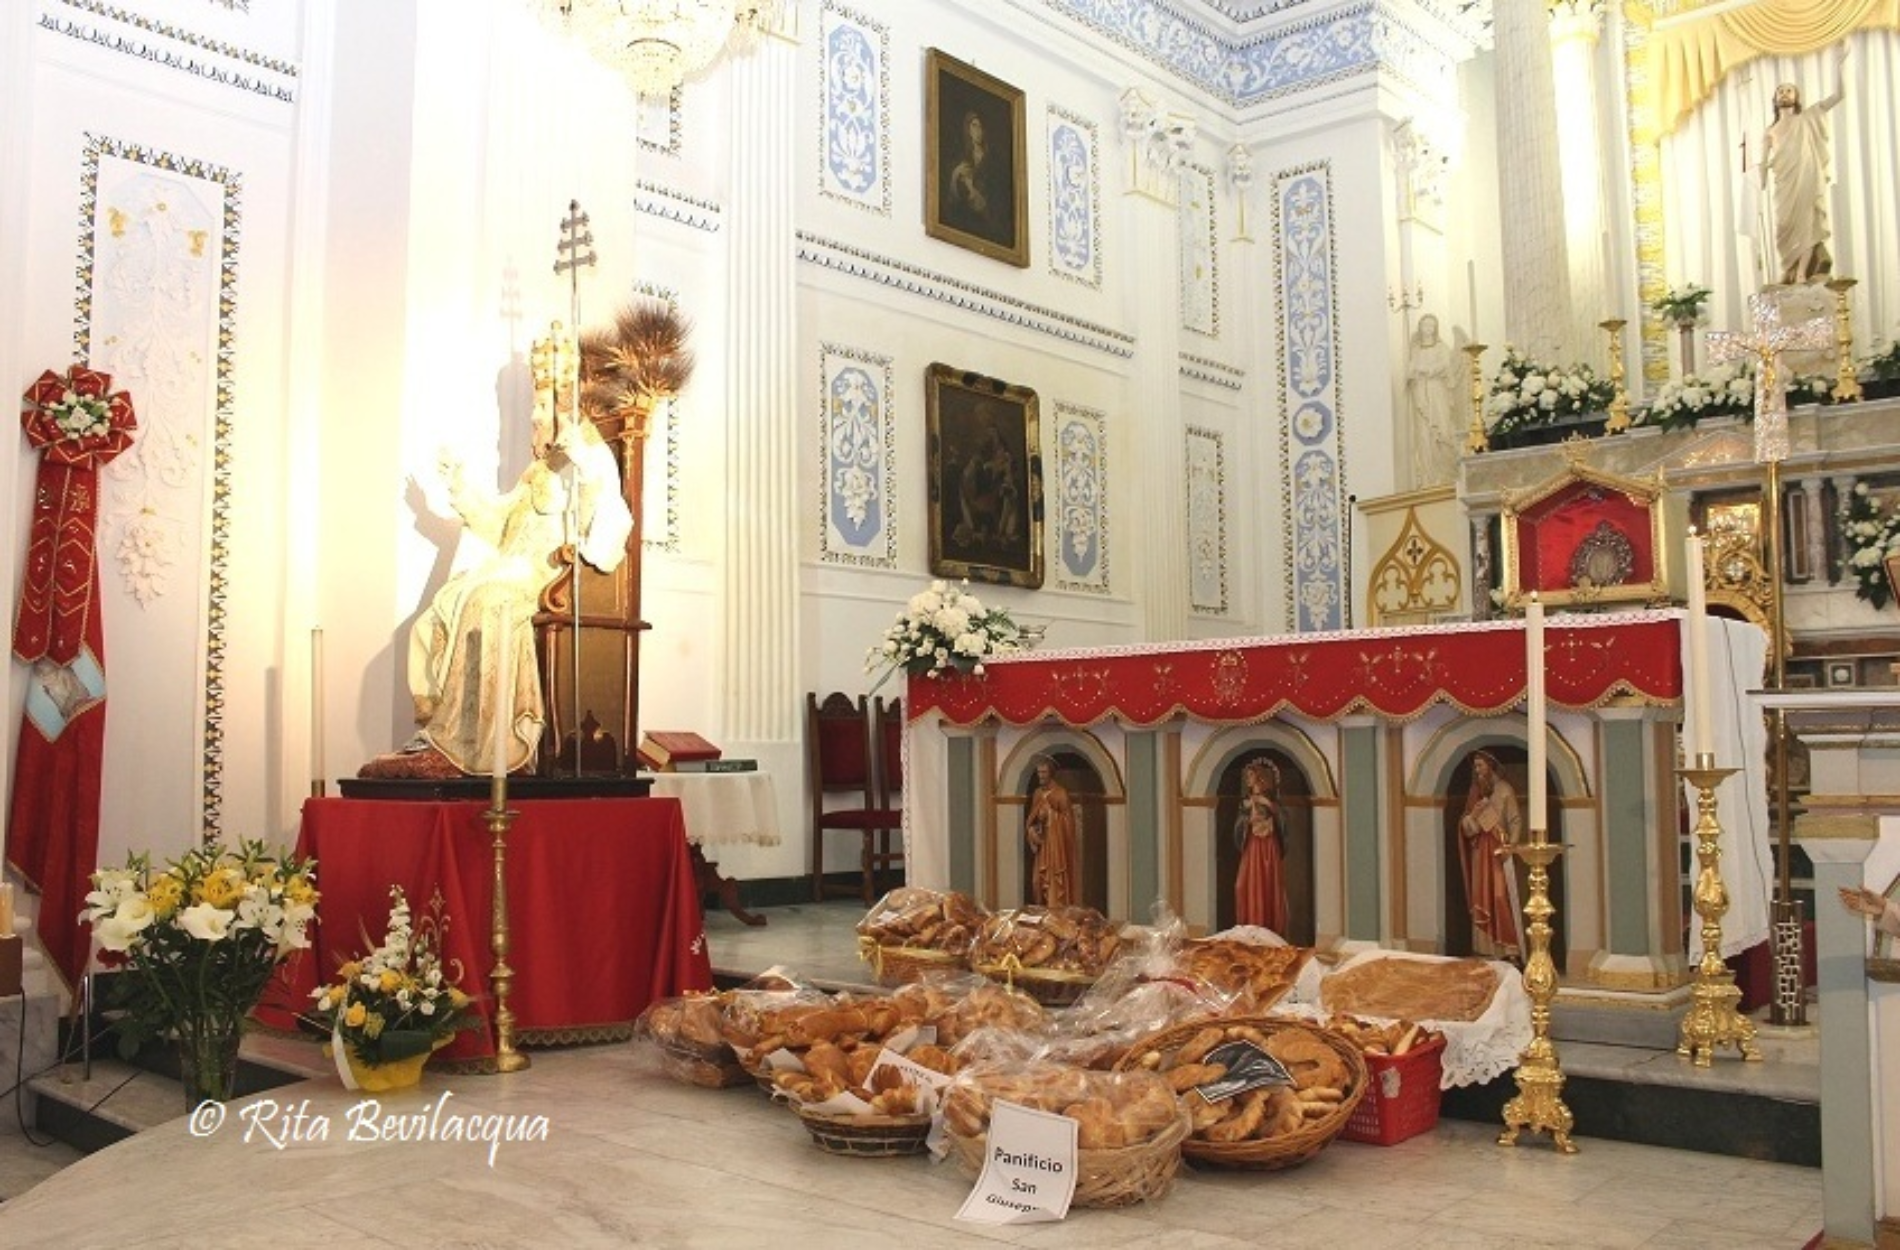 U pani di “Santruscianniru”- il pane antropomorfo offerto al Santo patrono di Barrafranca